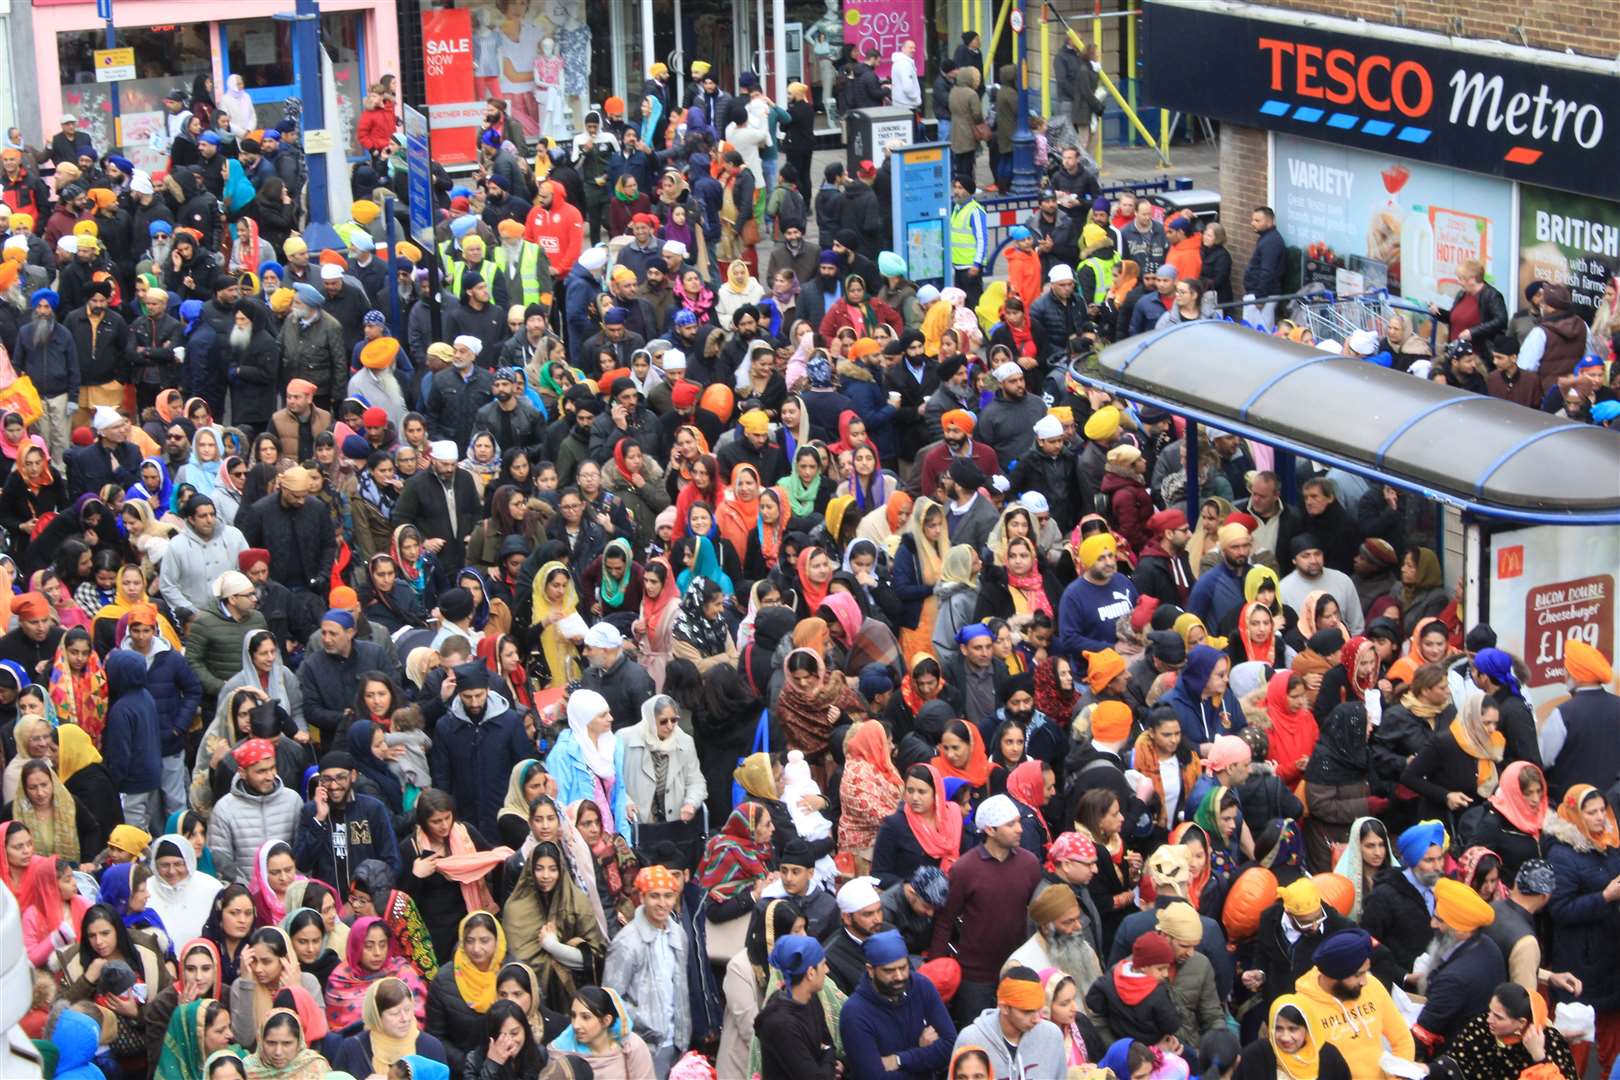 Crowds in Gravesend during Vaisakhi 2019